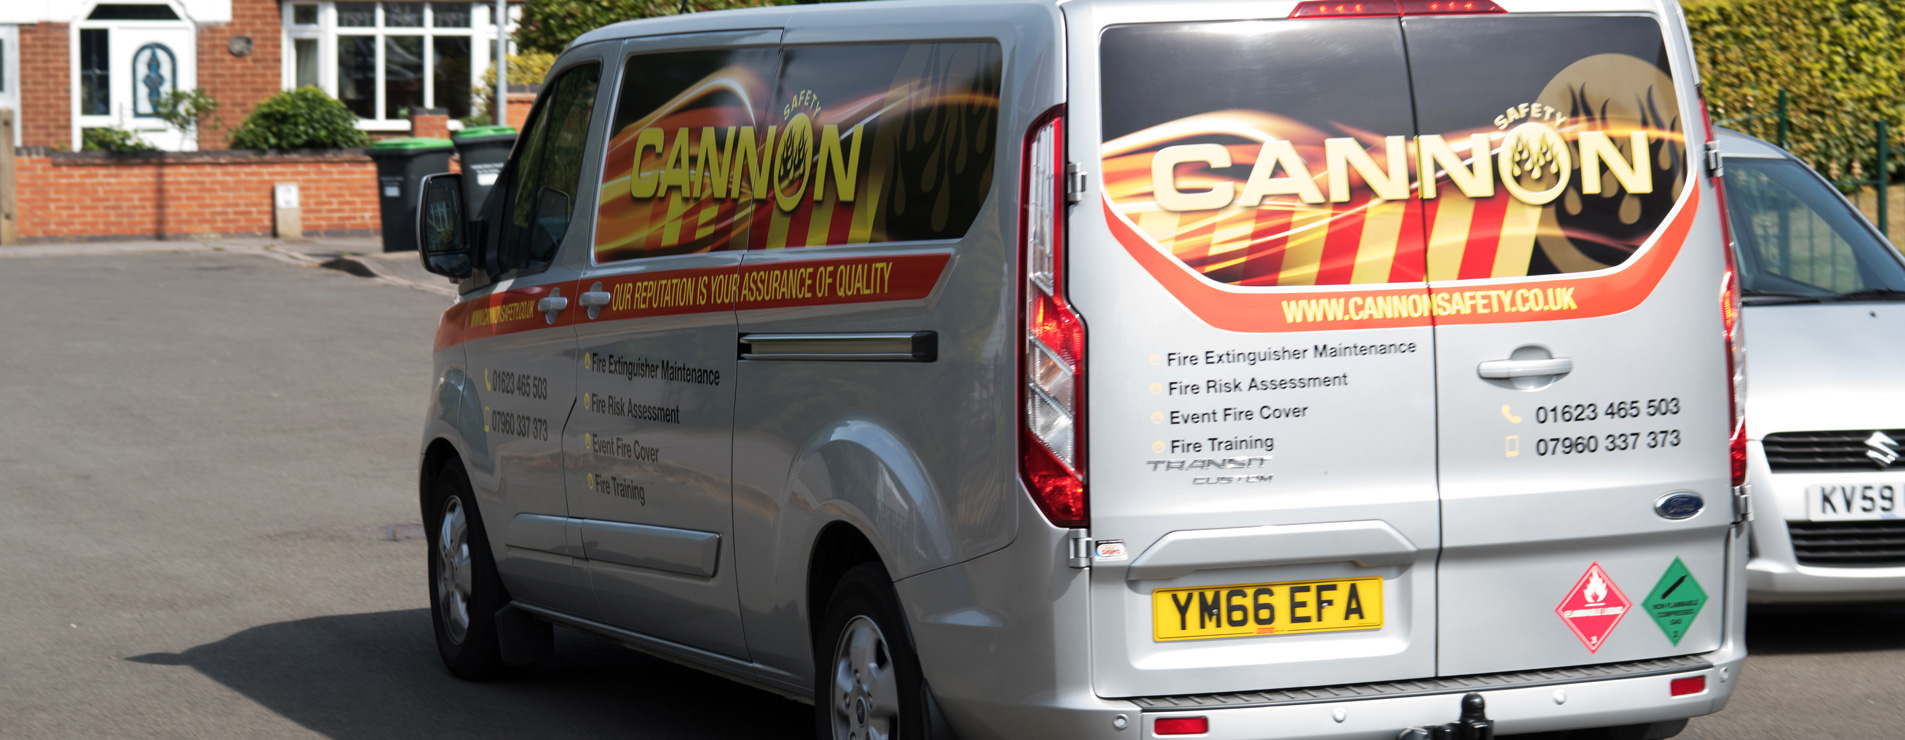 Cannon Safety van